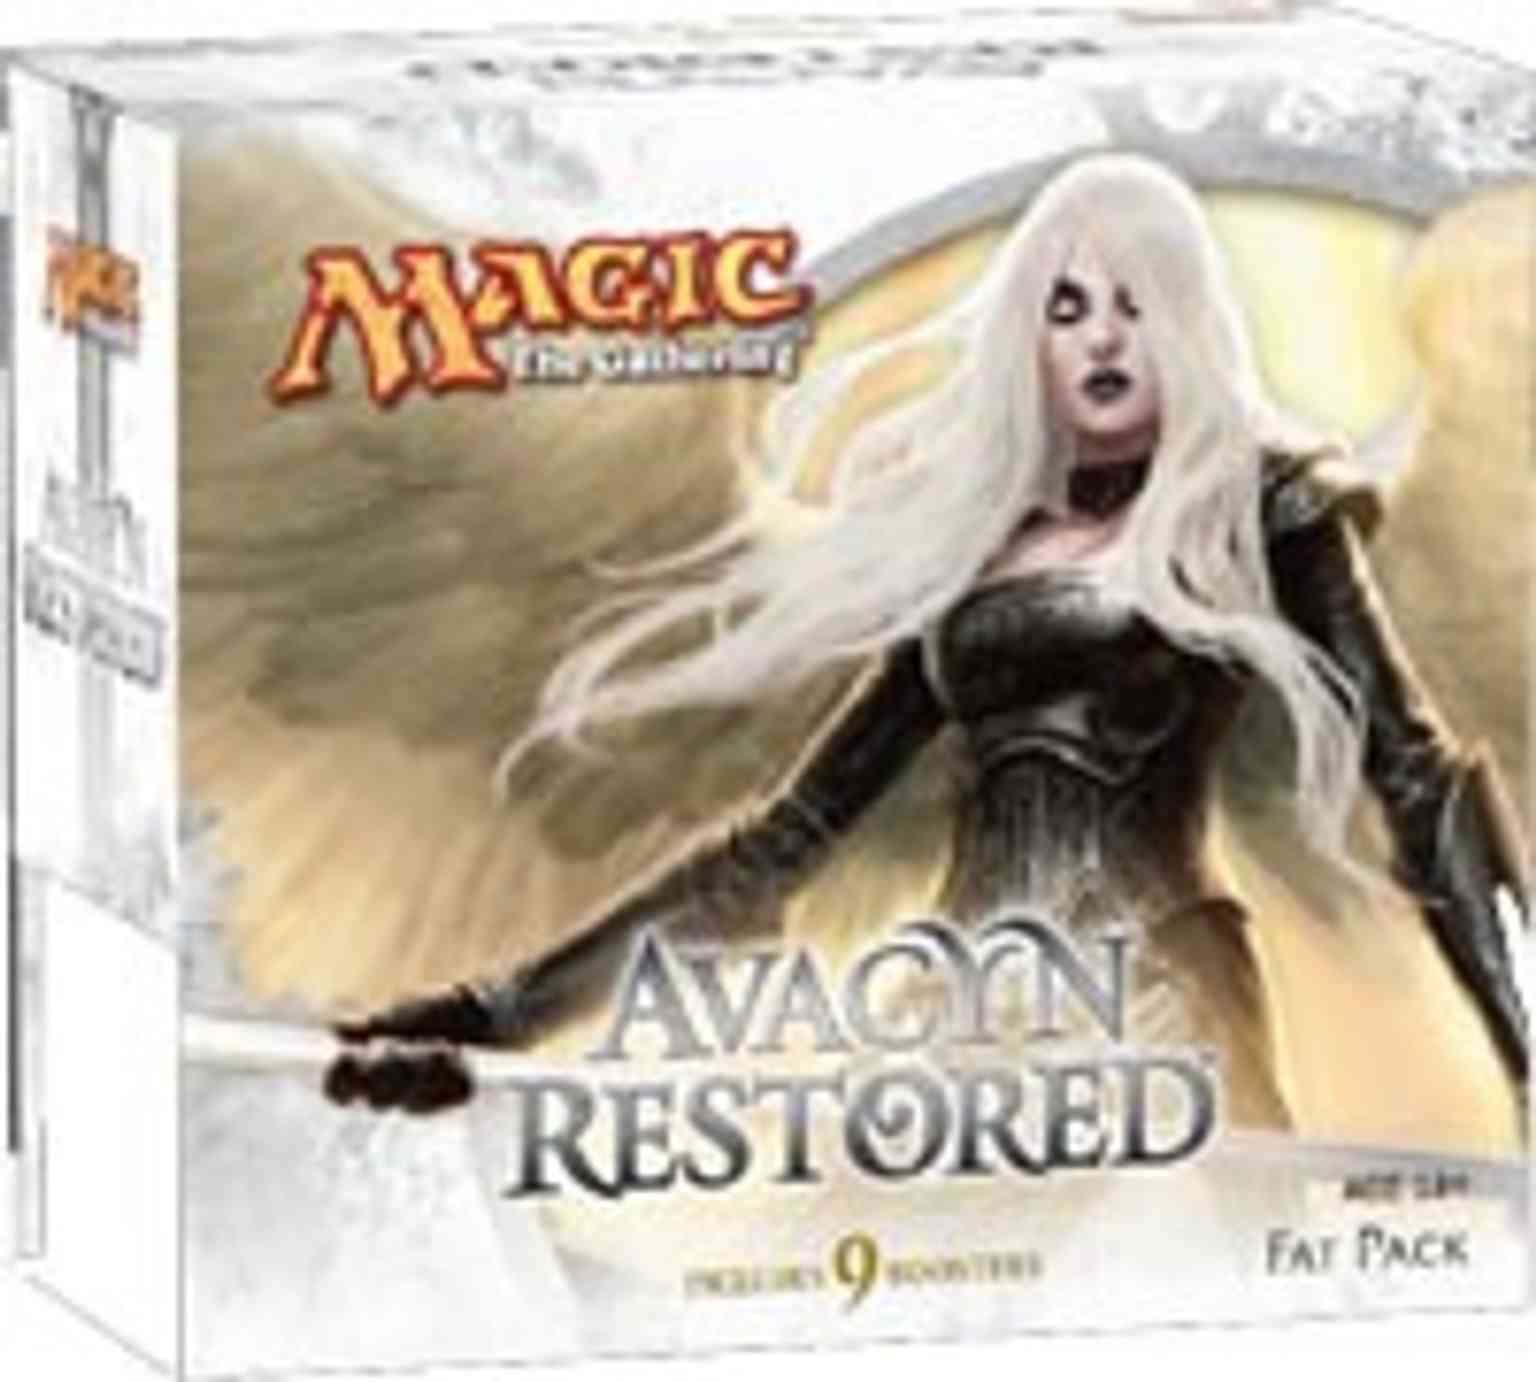 Avacyn Restored - Fat Pack magic card front